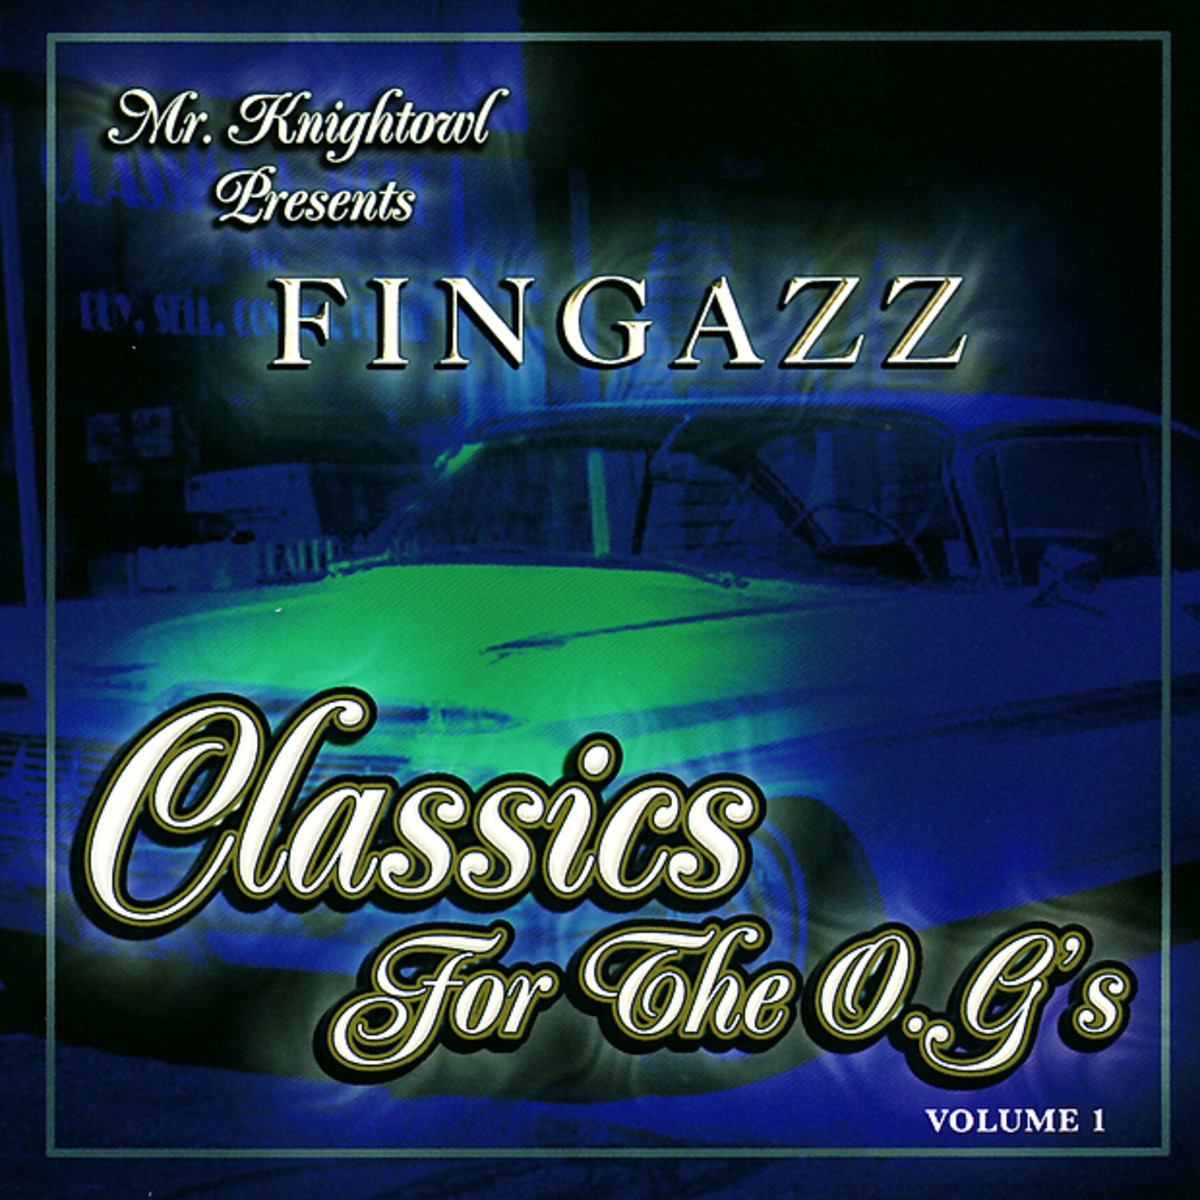 Mr. Knightowl Presents: Fingazz - Classics For the O.G.'s Volume 1